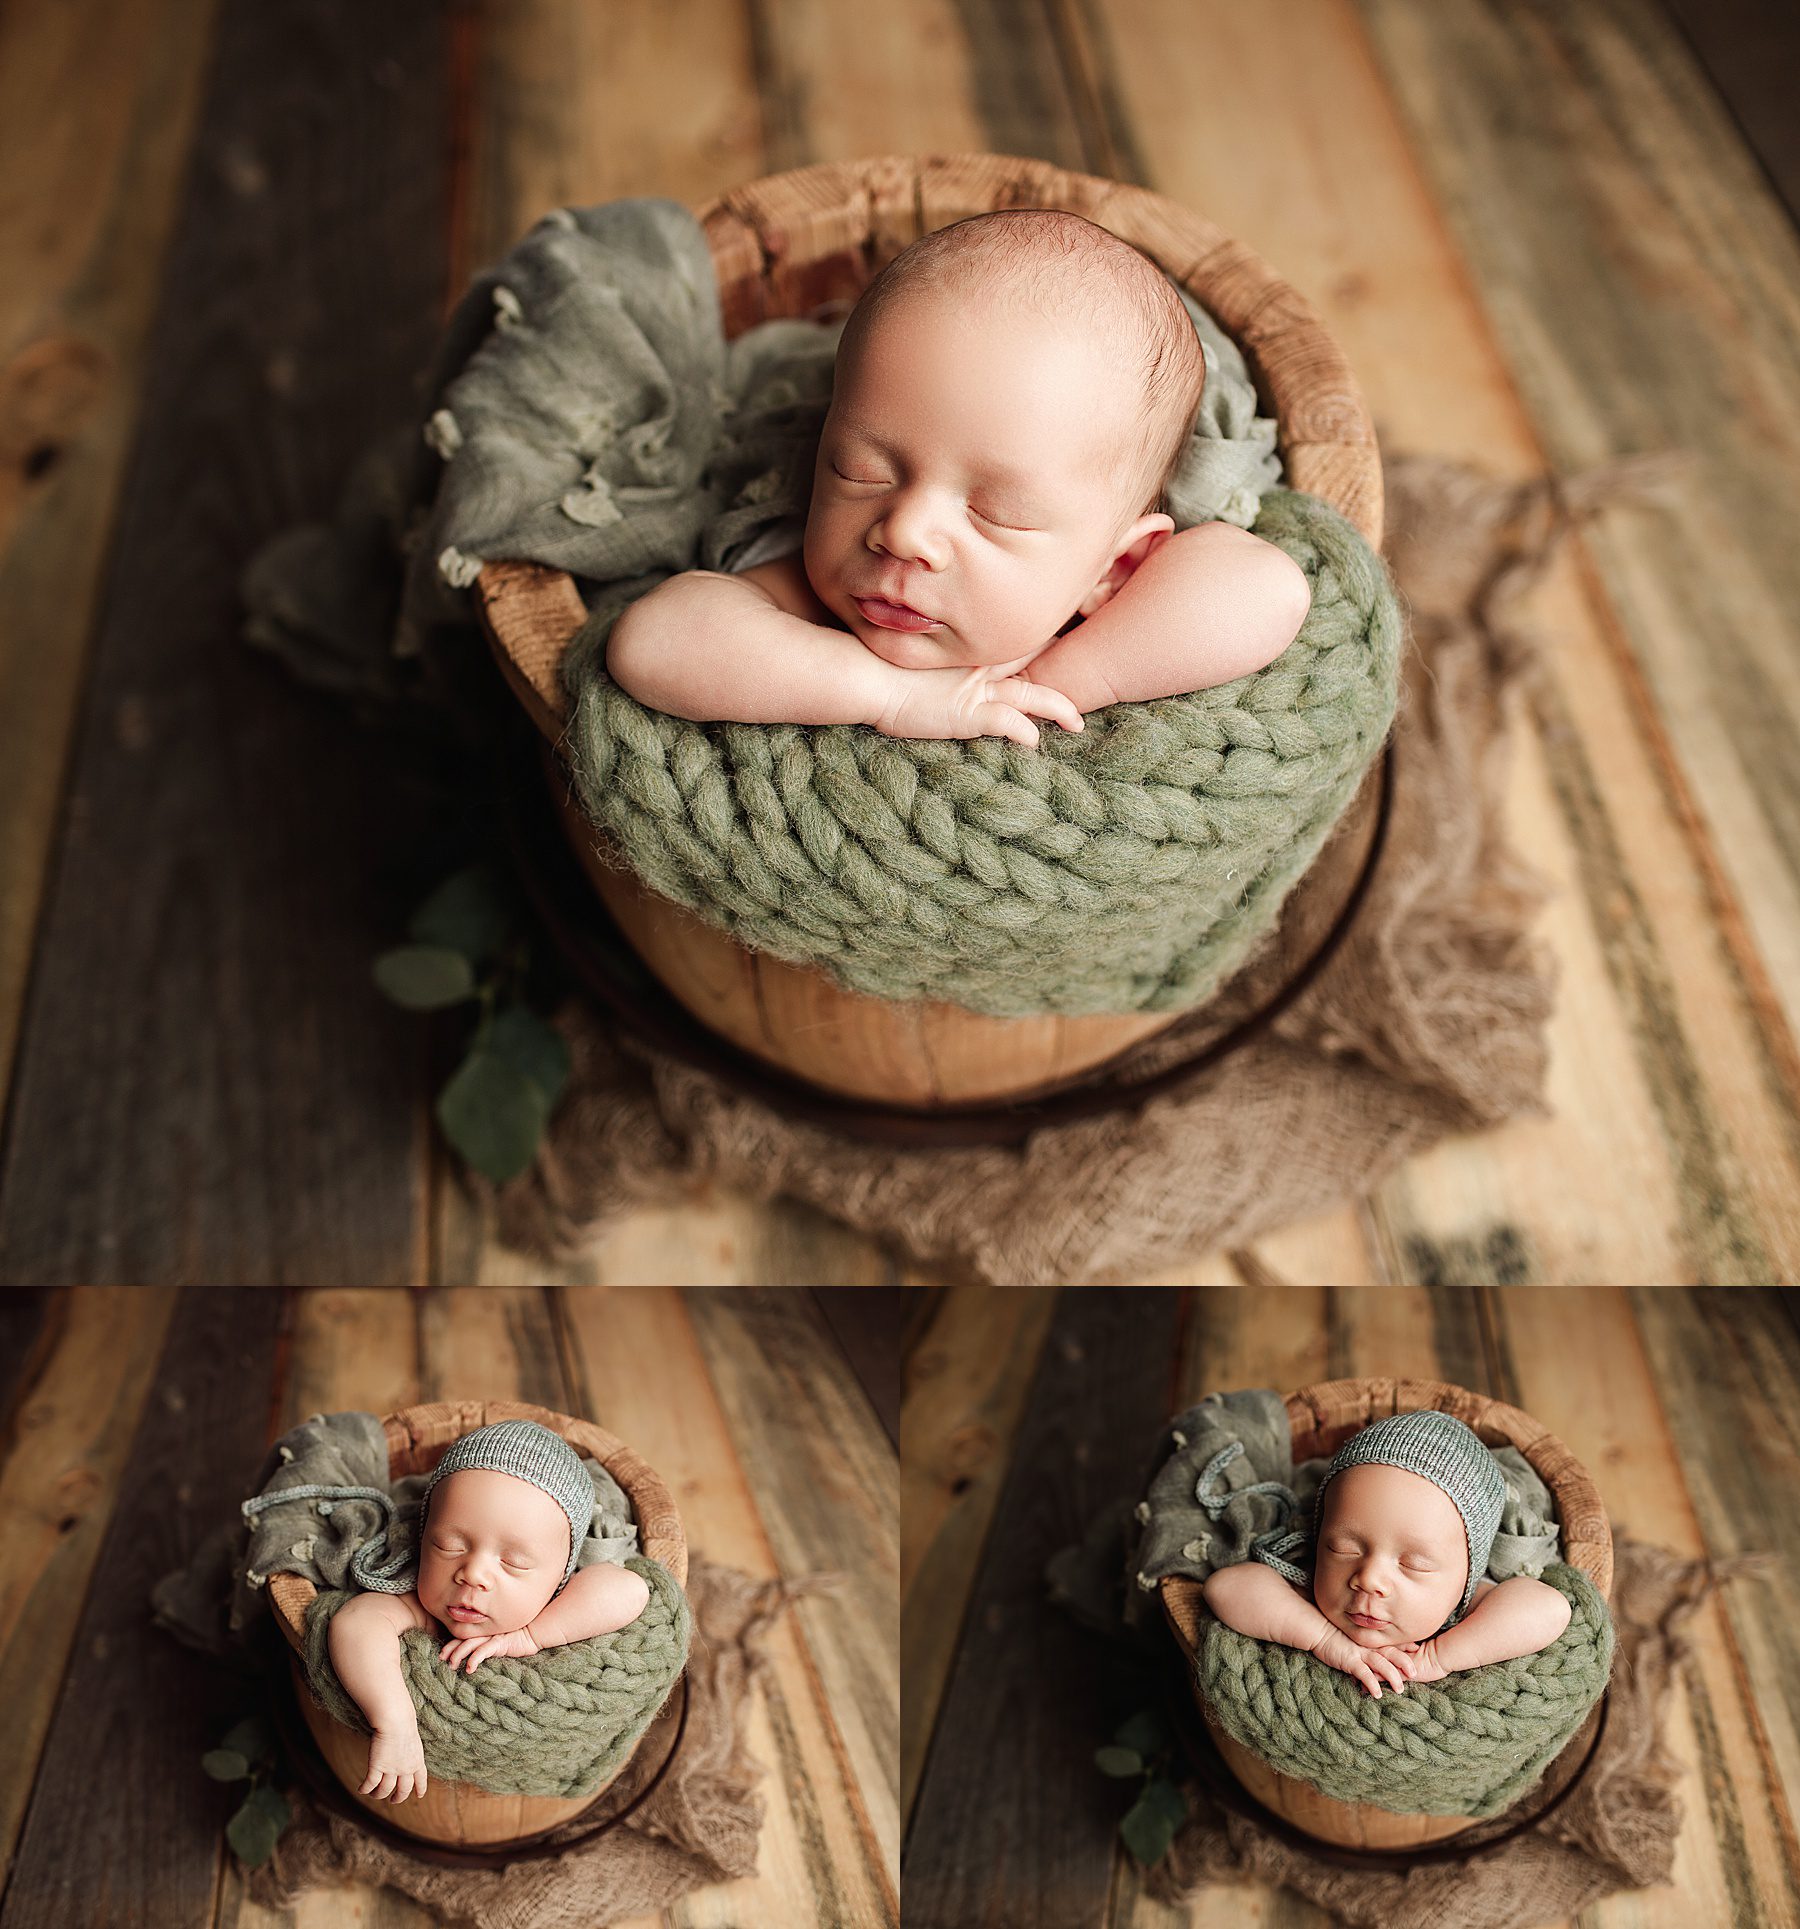 bucket pose, edmonton newborn photographers, newborn photography edmonton, tucked in pose, newborn boy poses, leduc newborn photographer